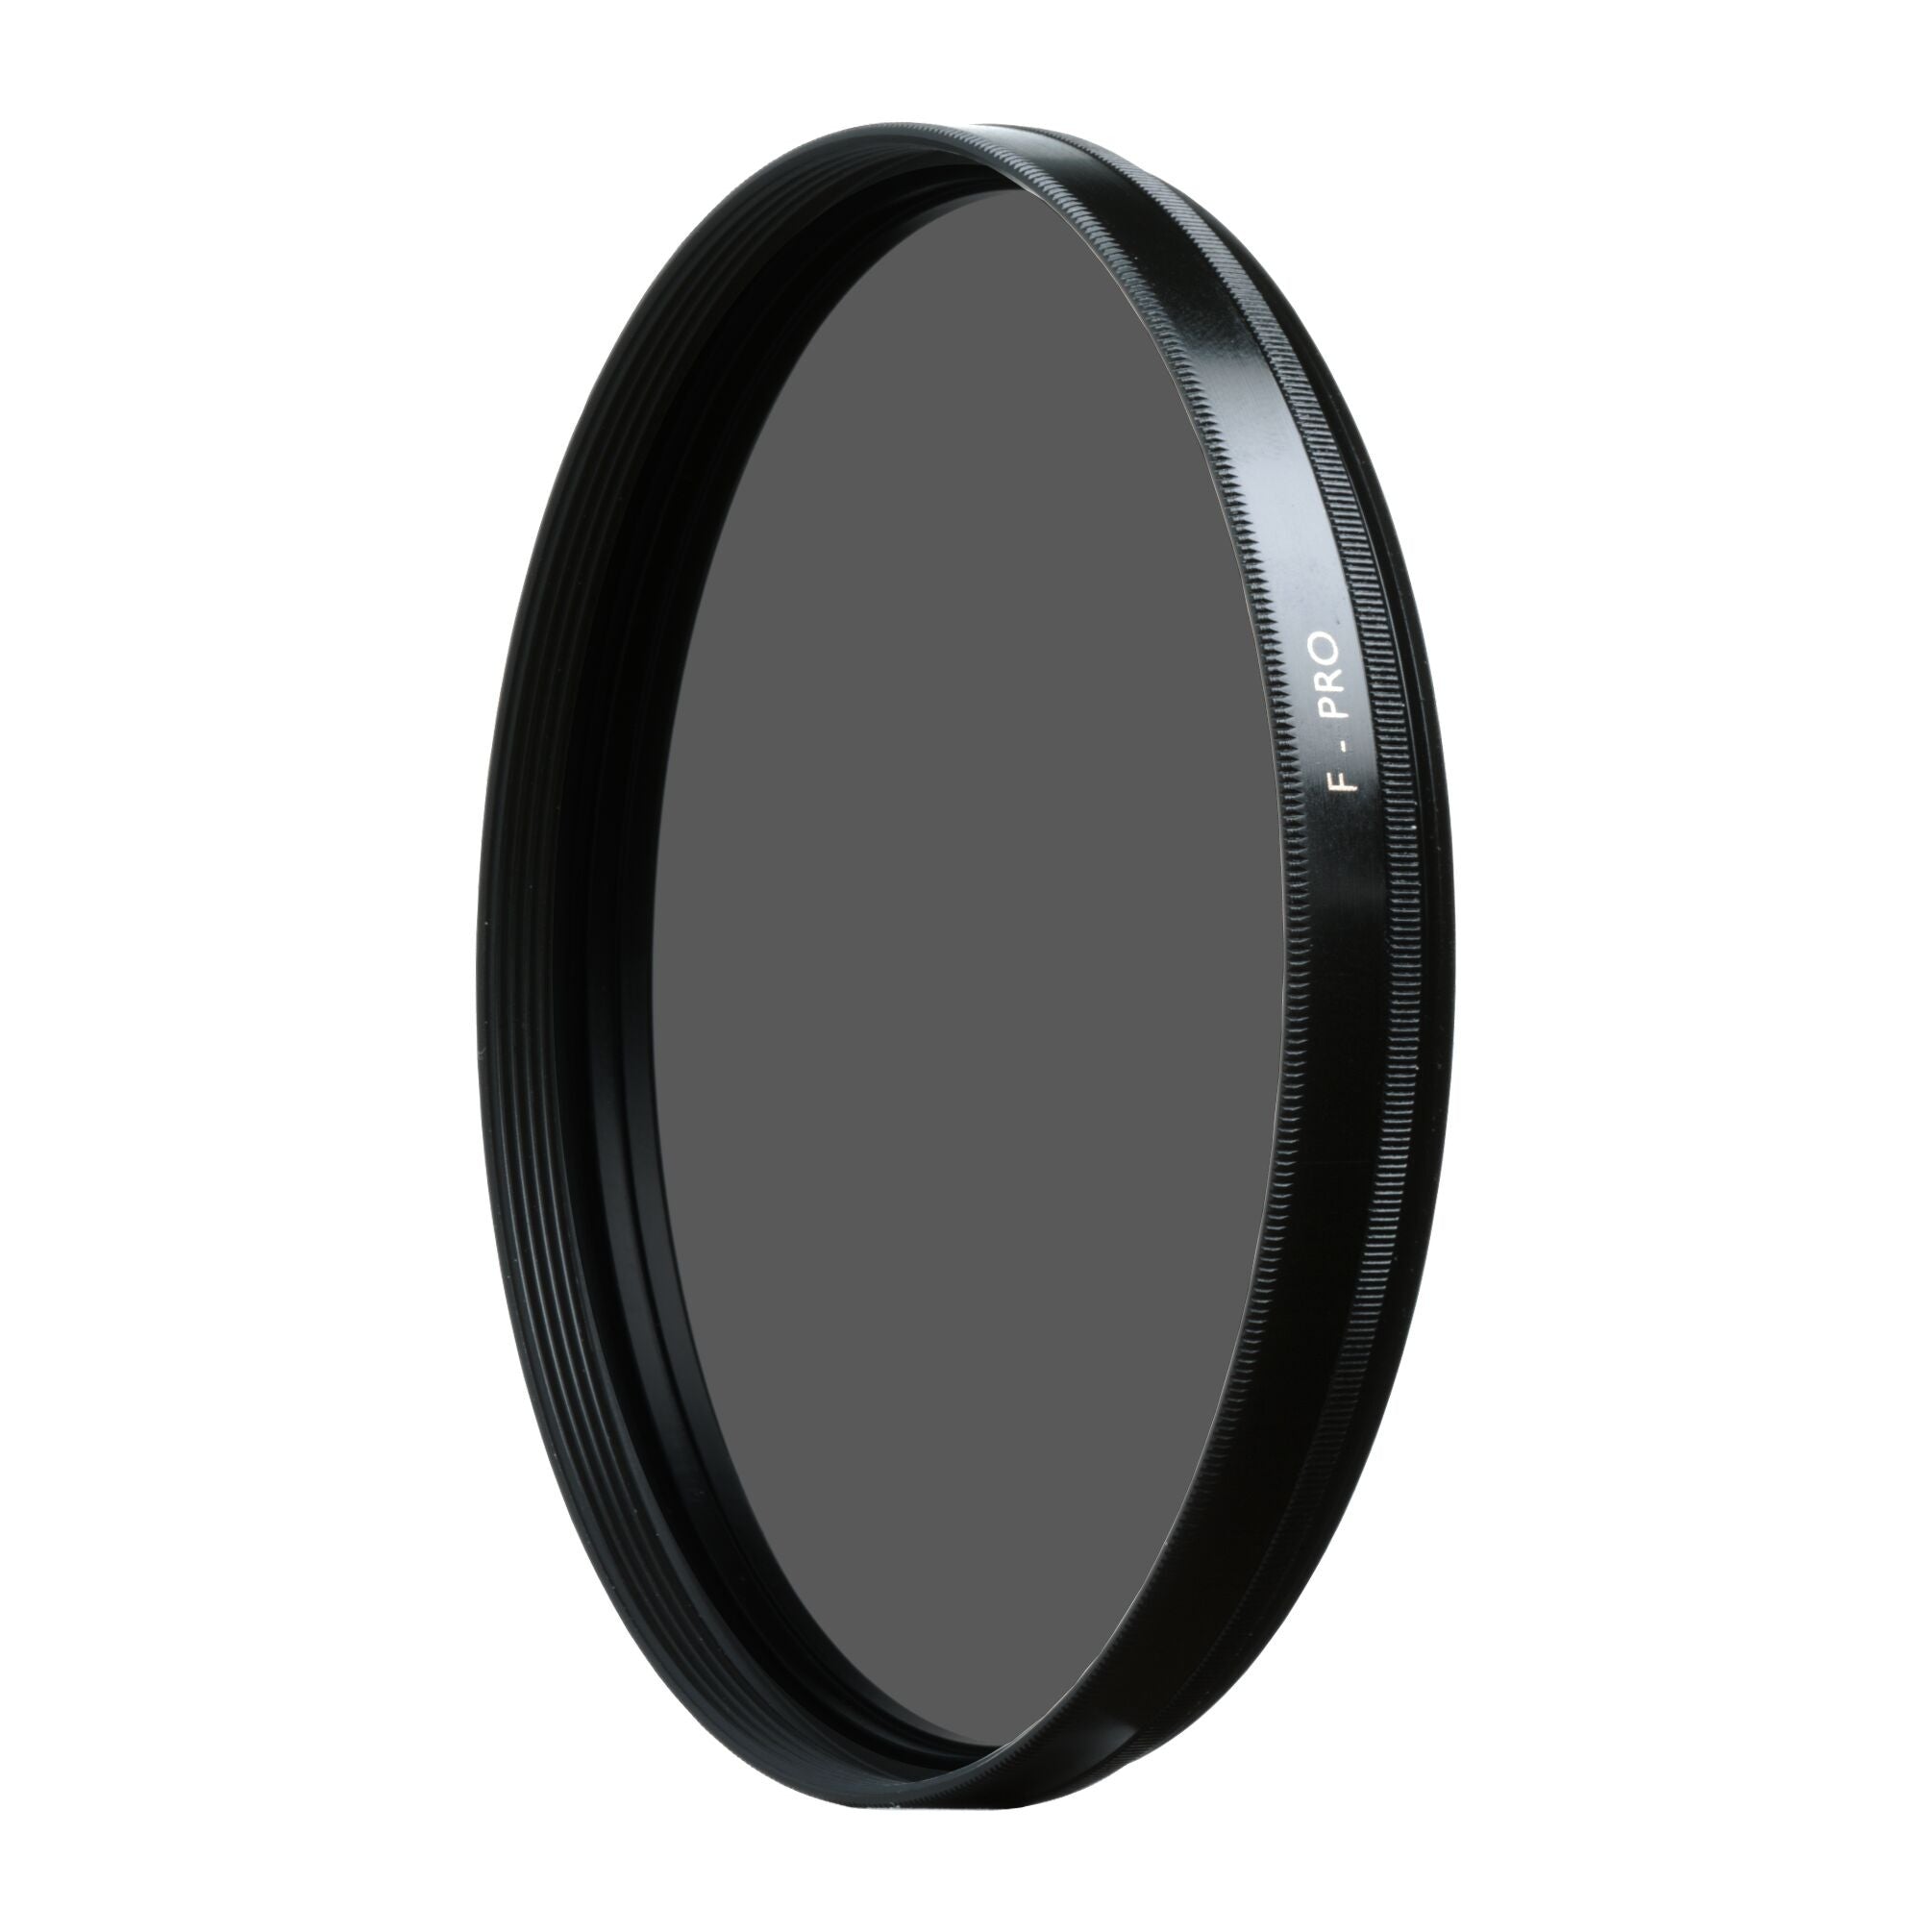 B+W 55mm Circular Polarizer Filter, lenses filters polarizer, B+W - Pictureline 